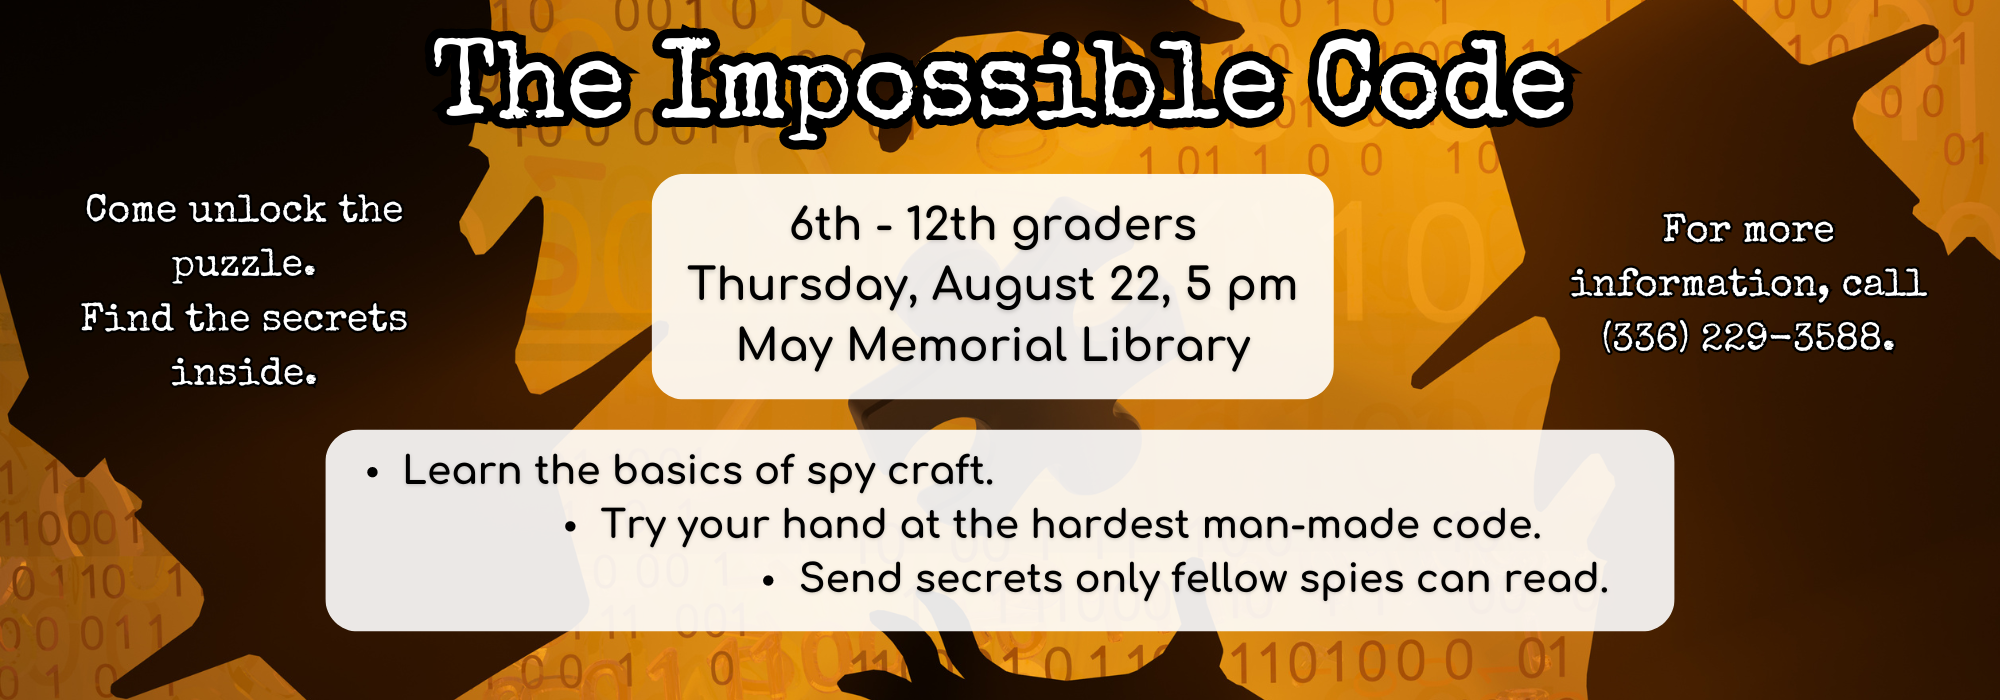 8.22 at 5 pm - The Impossible Code at May Memorial